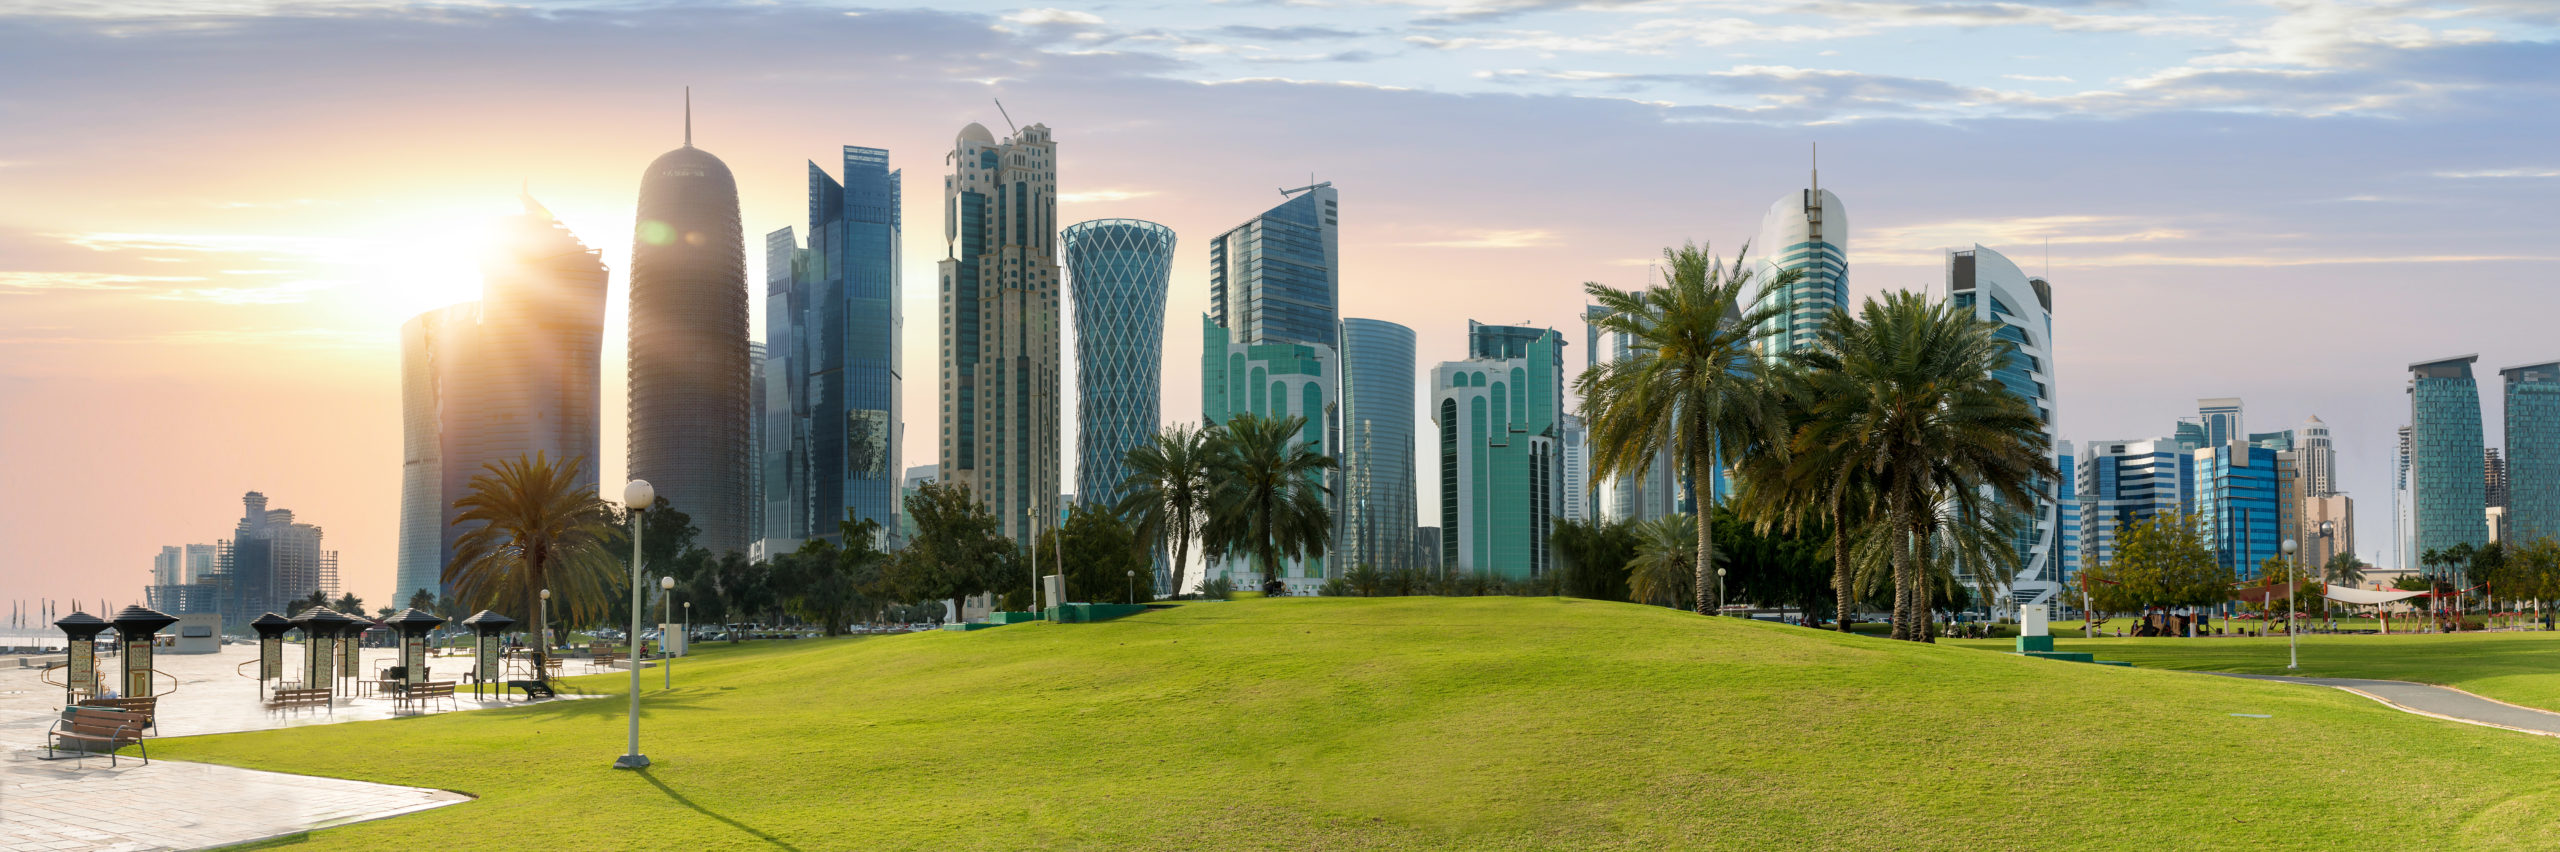 Qatar [Shutterstock]